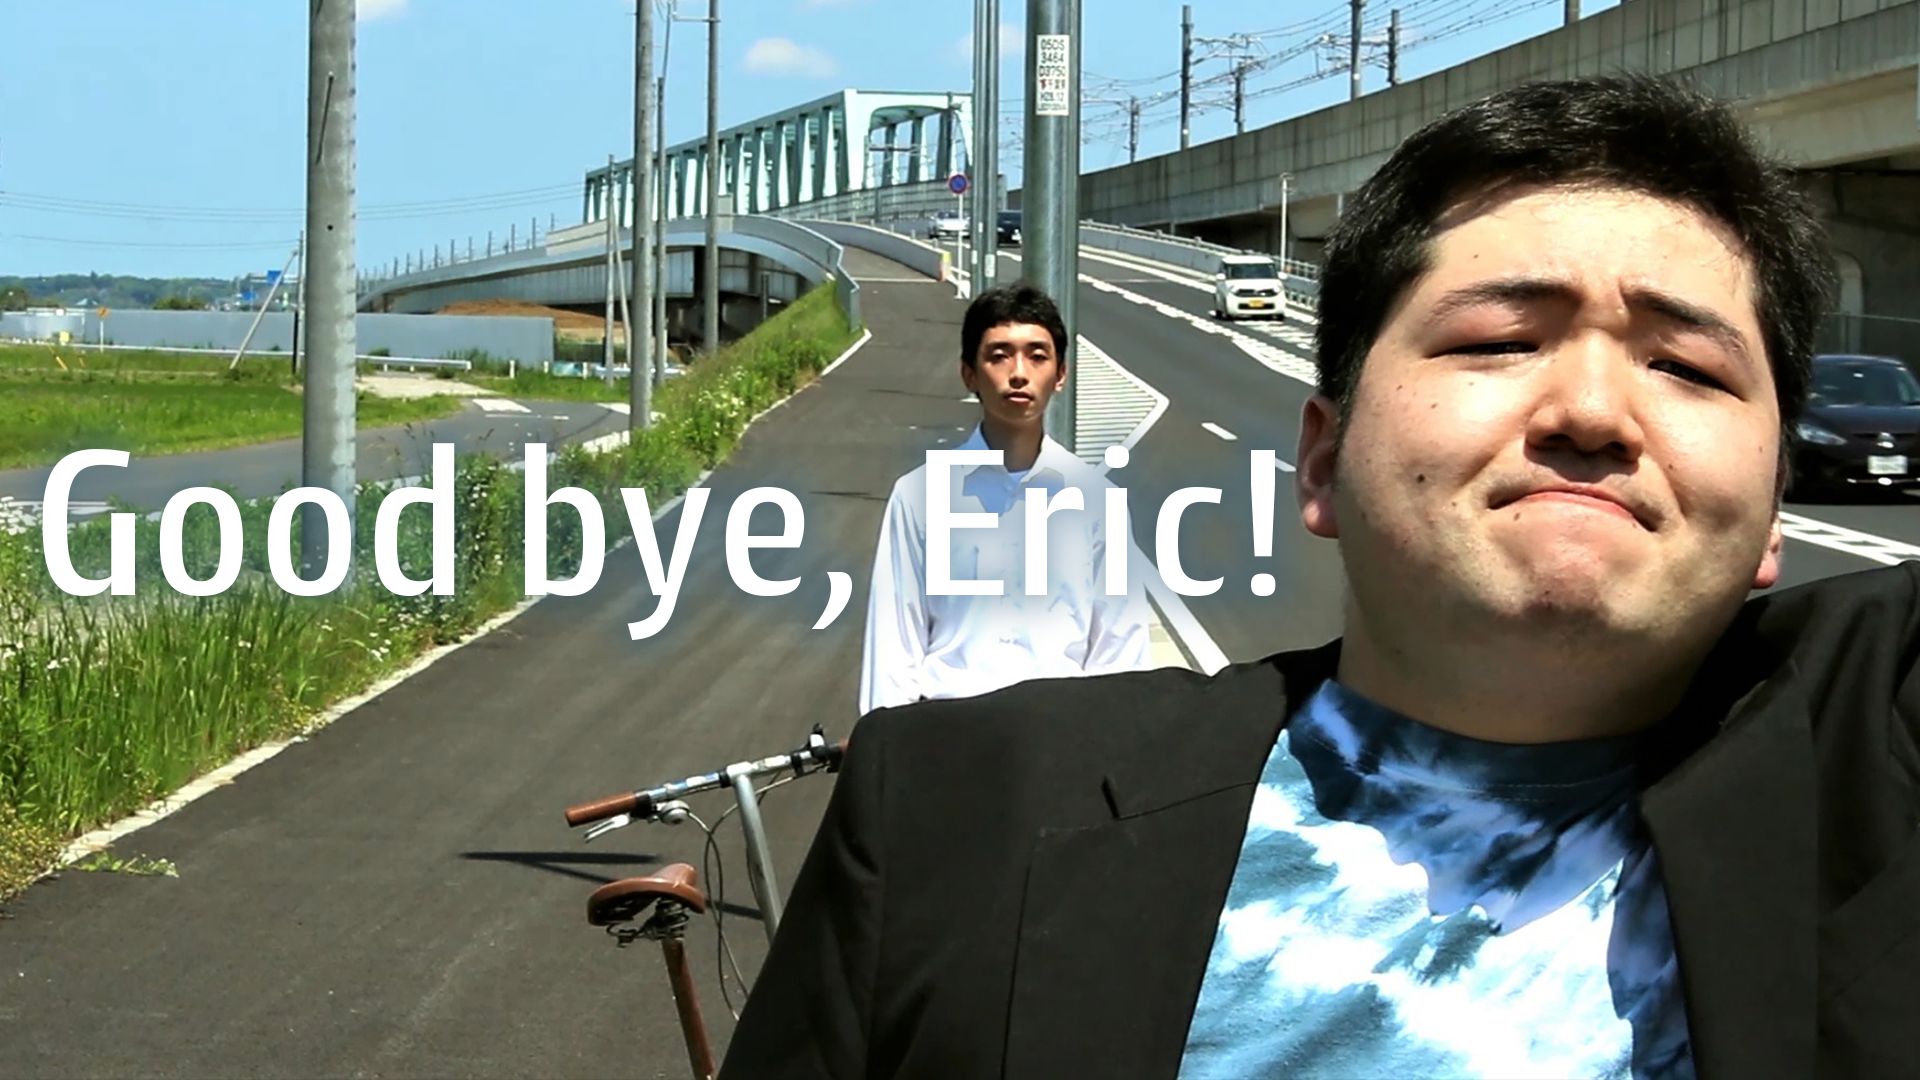 Good bye,Eric!